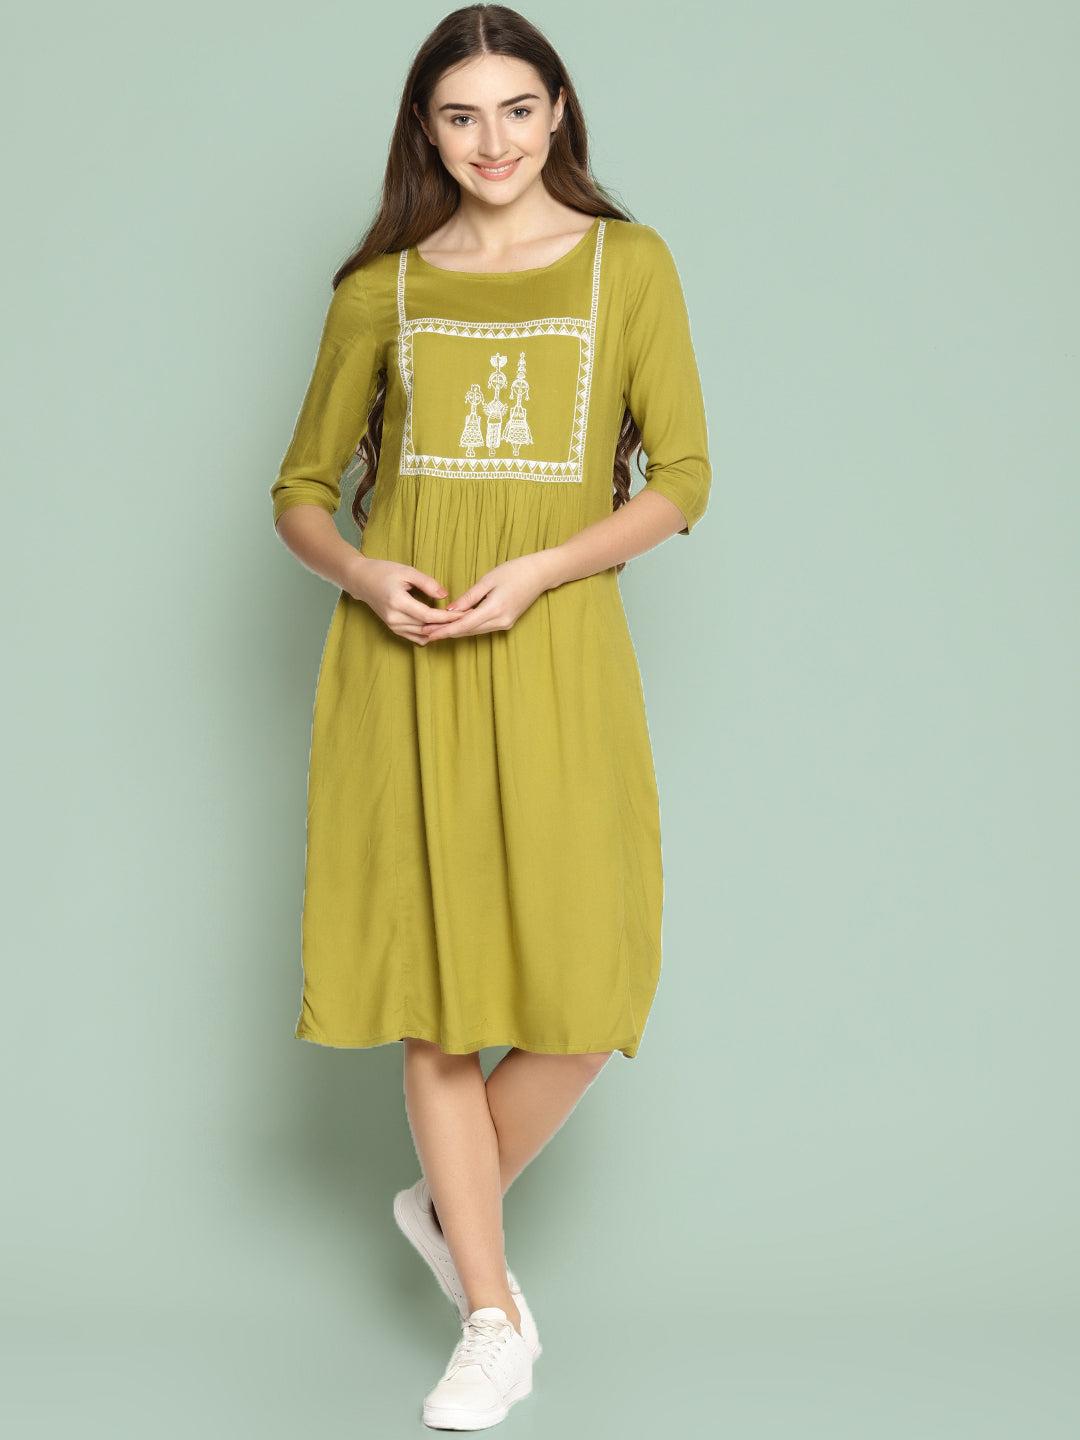 khaki-shift-dress-with-embroidery